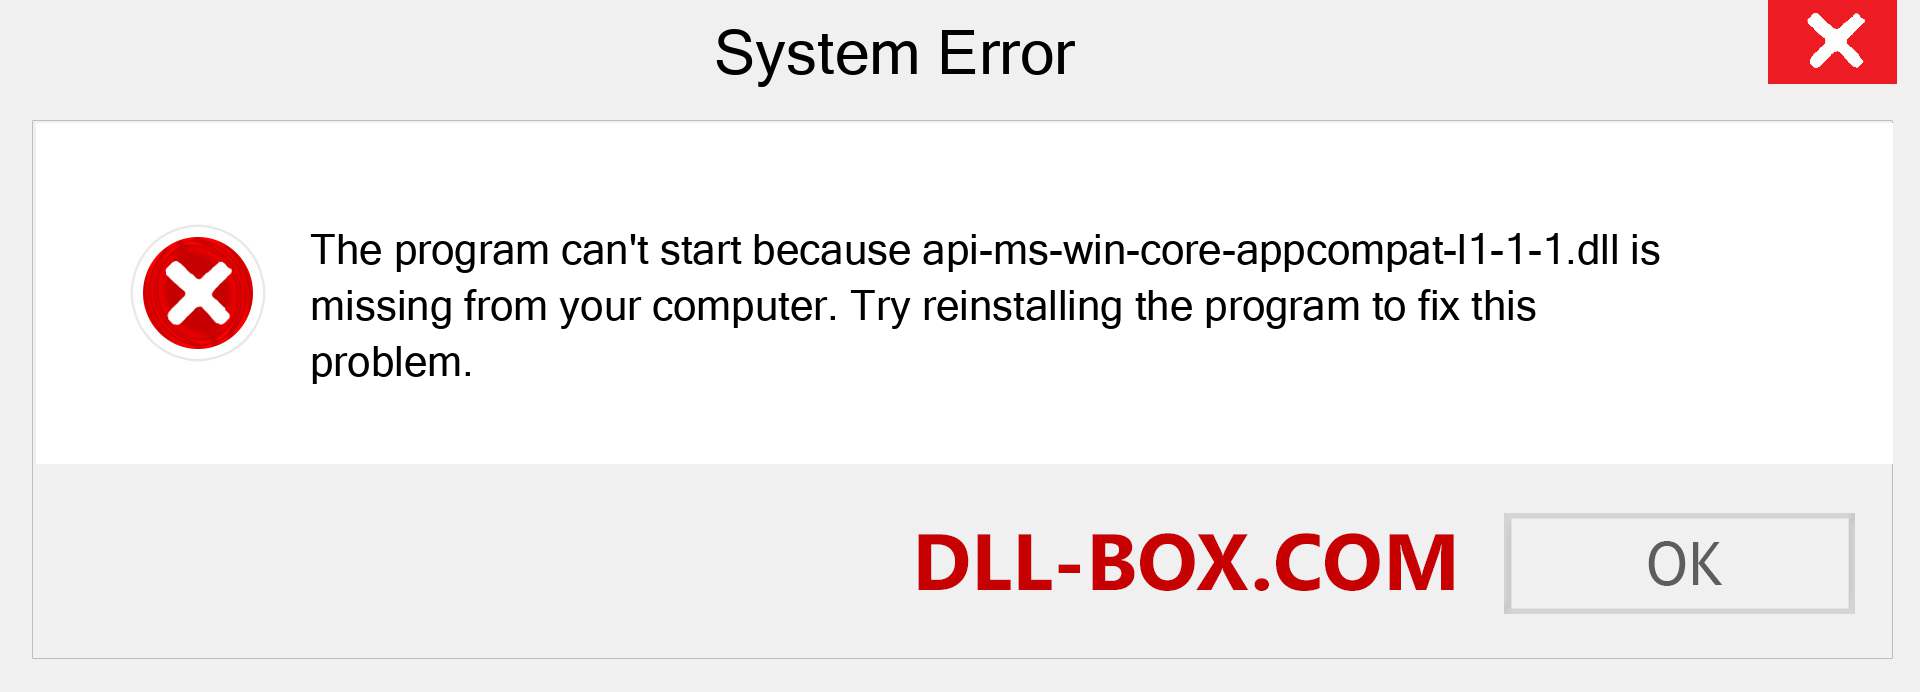  api-ms-win-core-appcompat-l1-1-1.dll file is missing?. Download for Windows 7, 8, 10 - Fix  api-ms-win-core-appcompat-l1-1-1 dll Missing Error on Windows, photos, images